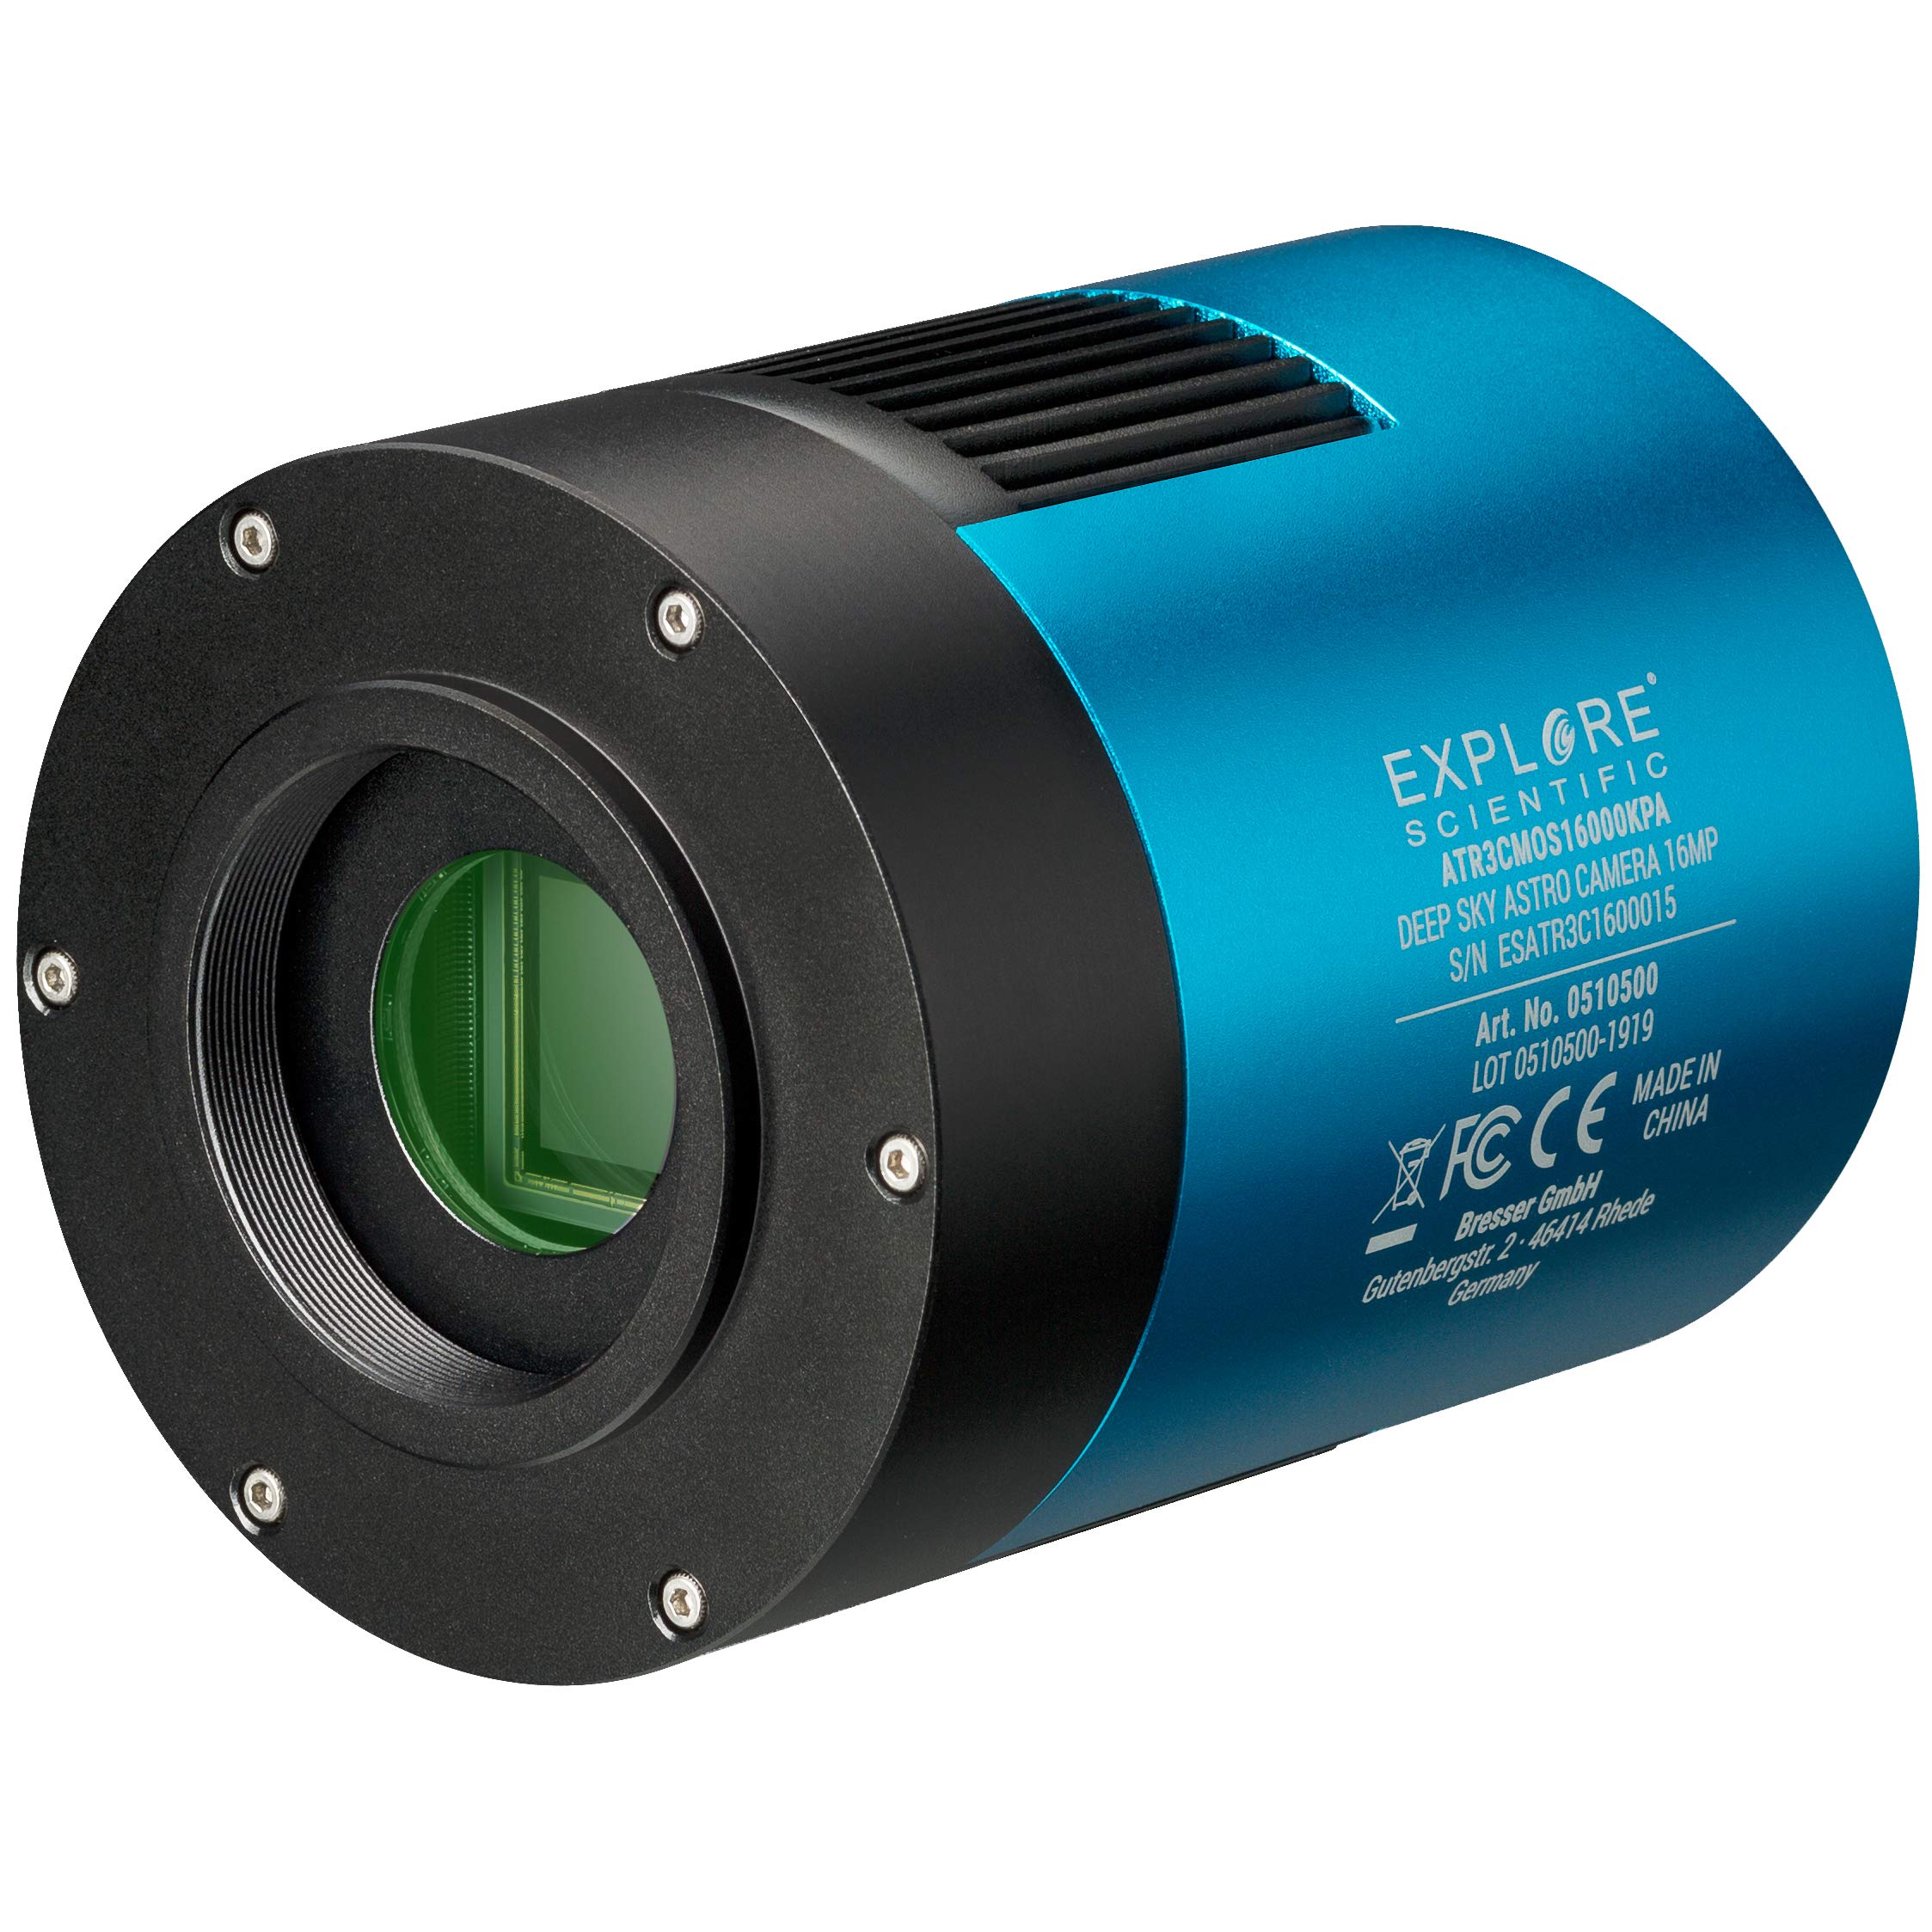 Explore Scientific Deep Sky Astro Farb Kamera 16MP USB 3.0 mit Panasonic CMOS Sensor und aktiver Kühlung